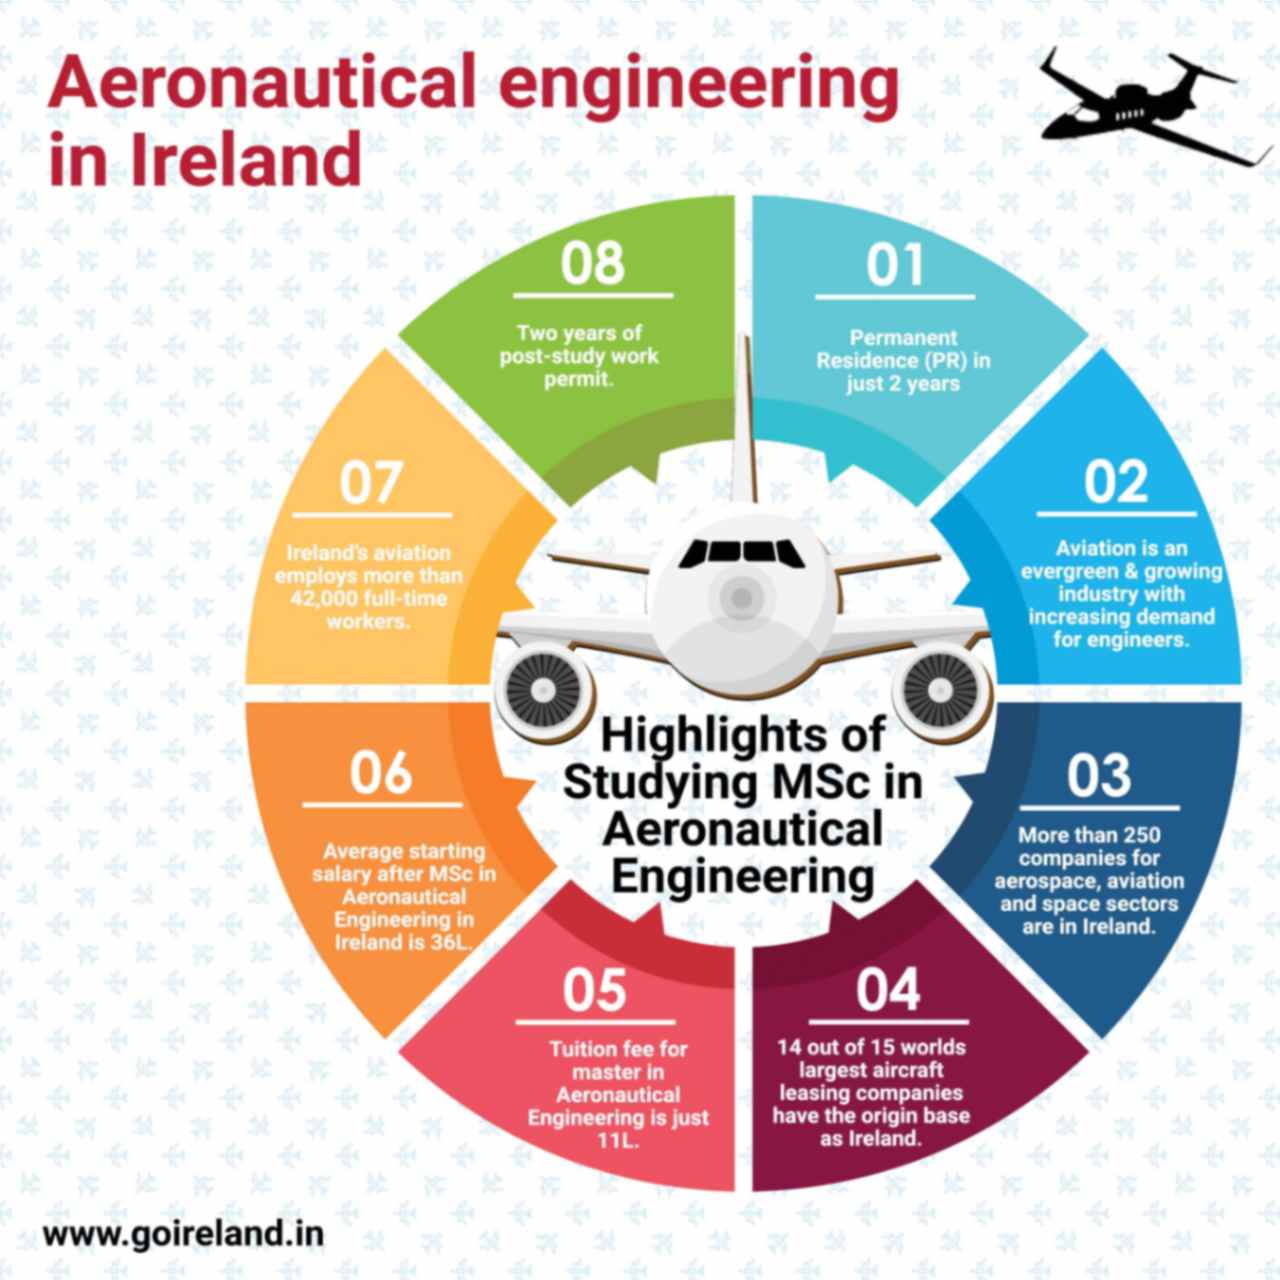 Highlights of Studying MSC in Aeronautical Engineering